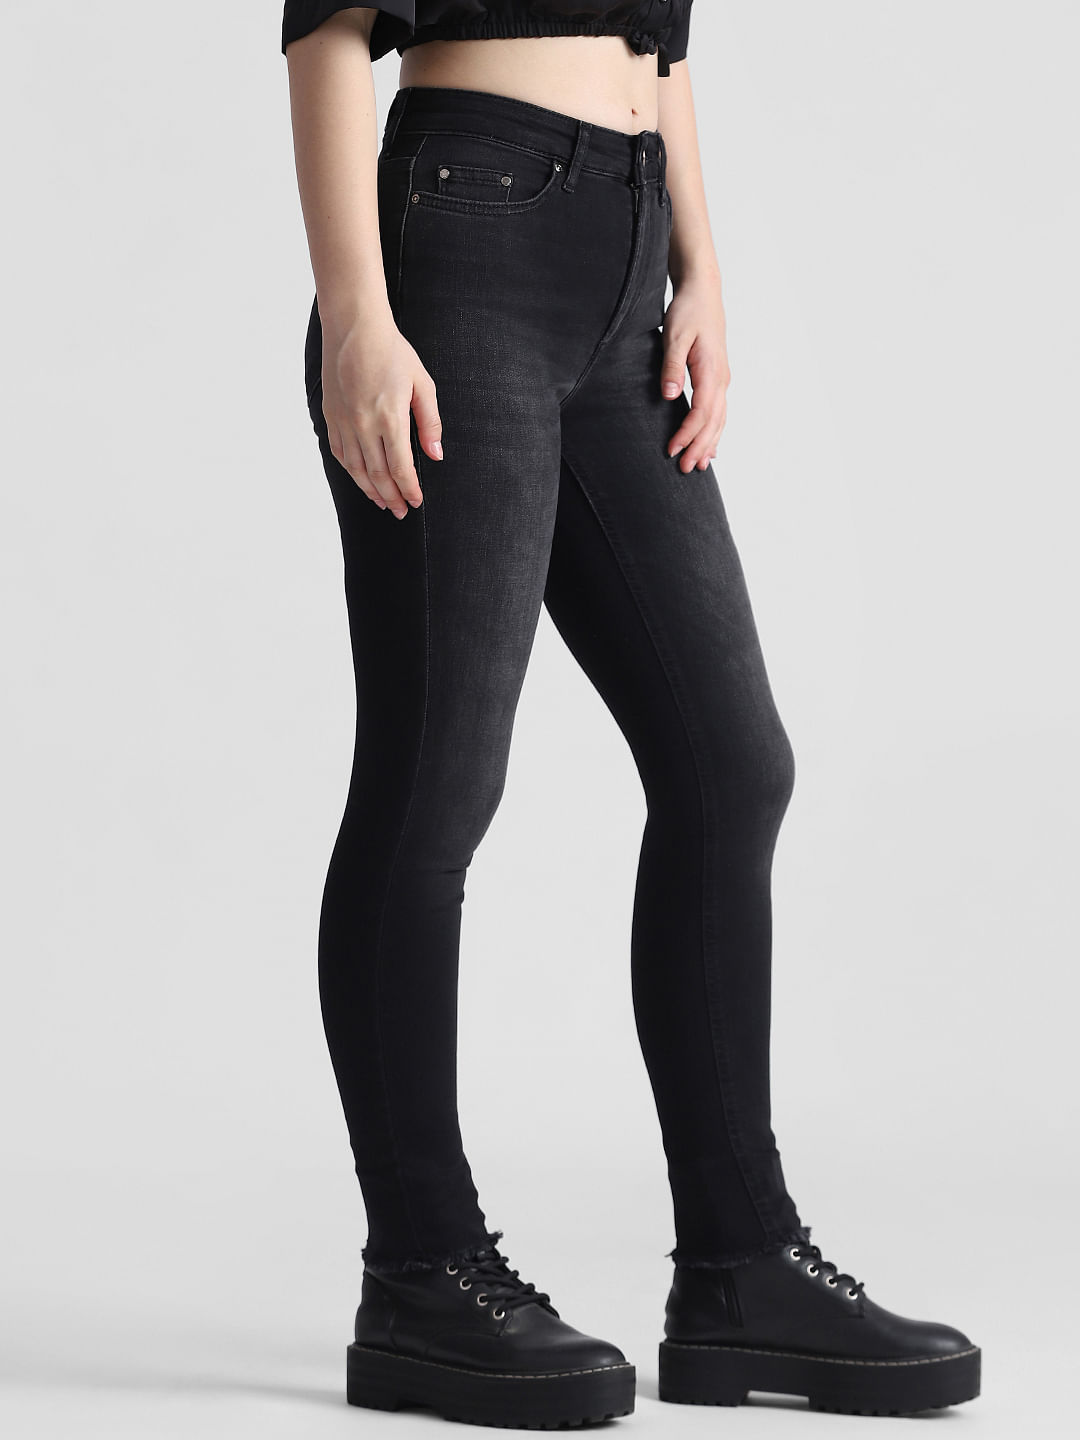 New Black skinny jeans - Women - 1756618176